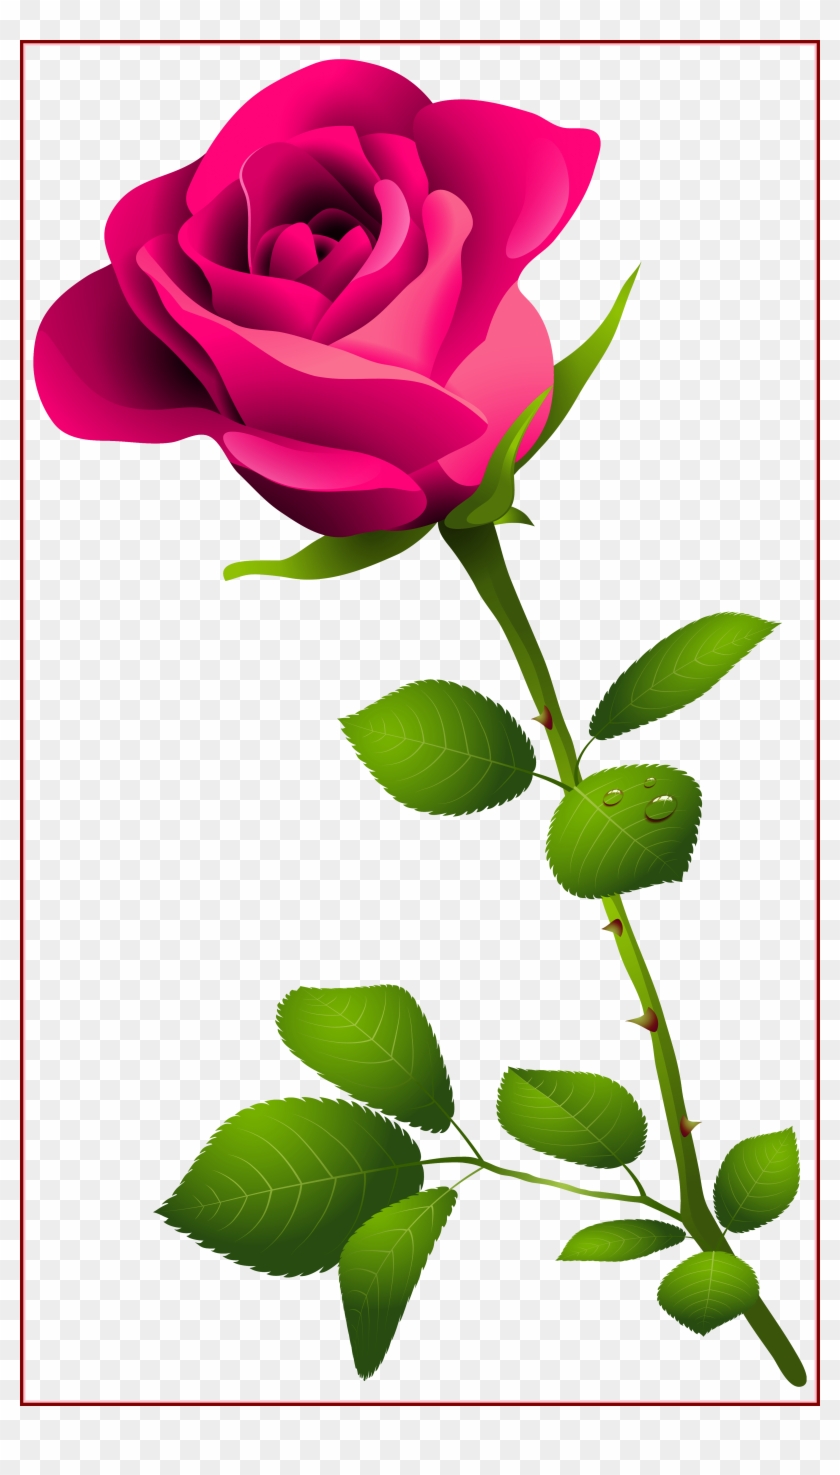 Rose Flower Rose Flower Images P Amazing Pink Rose - Happy Rose Day Image Download #1017189